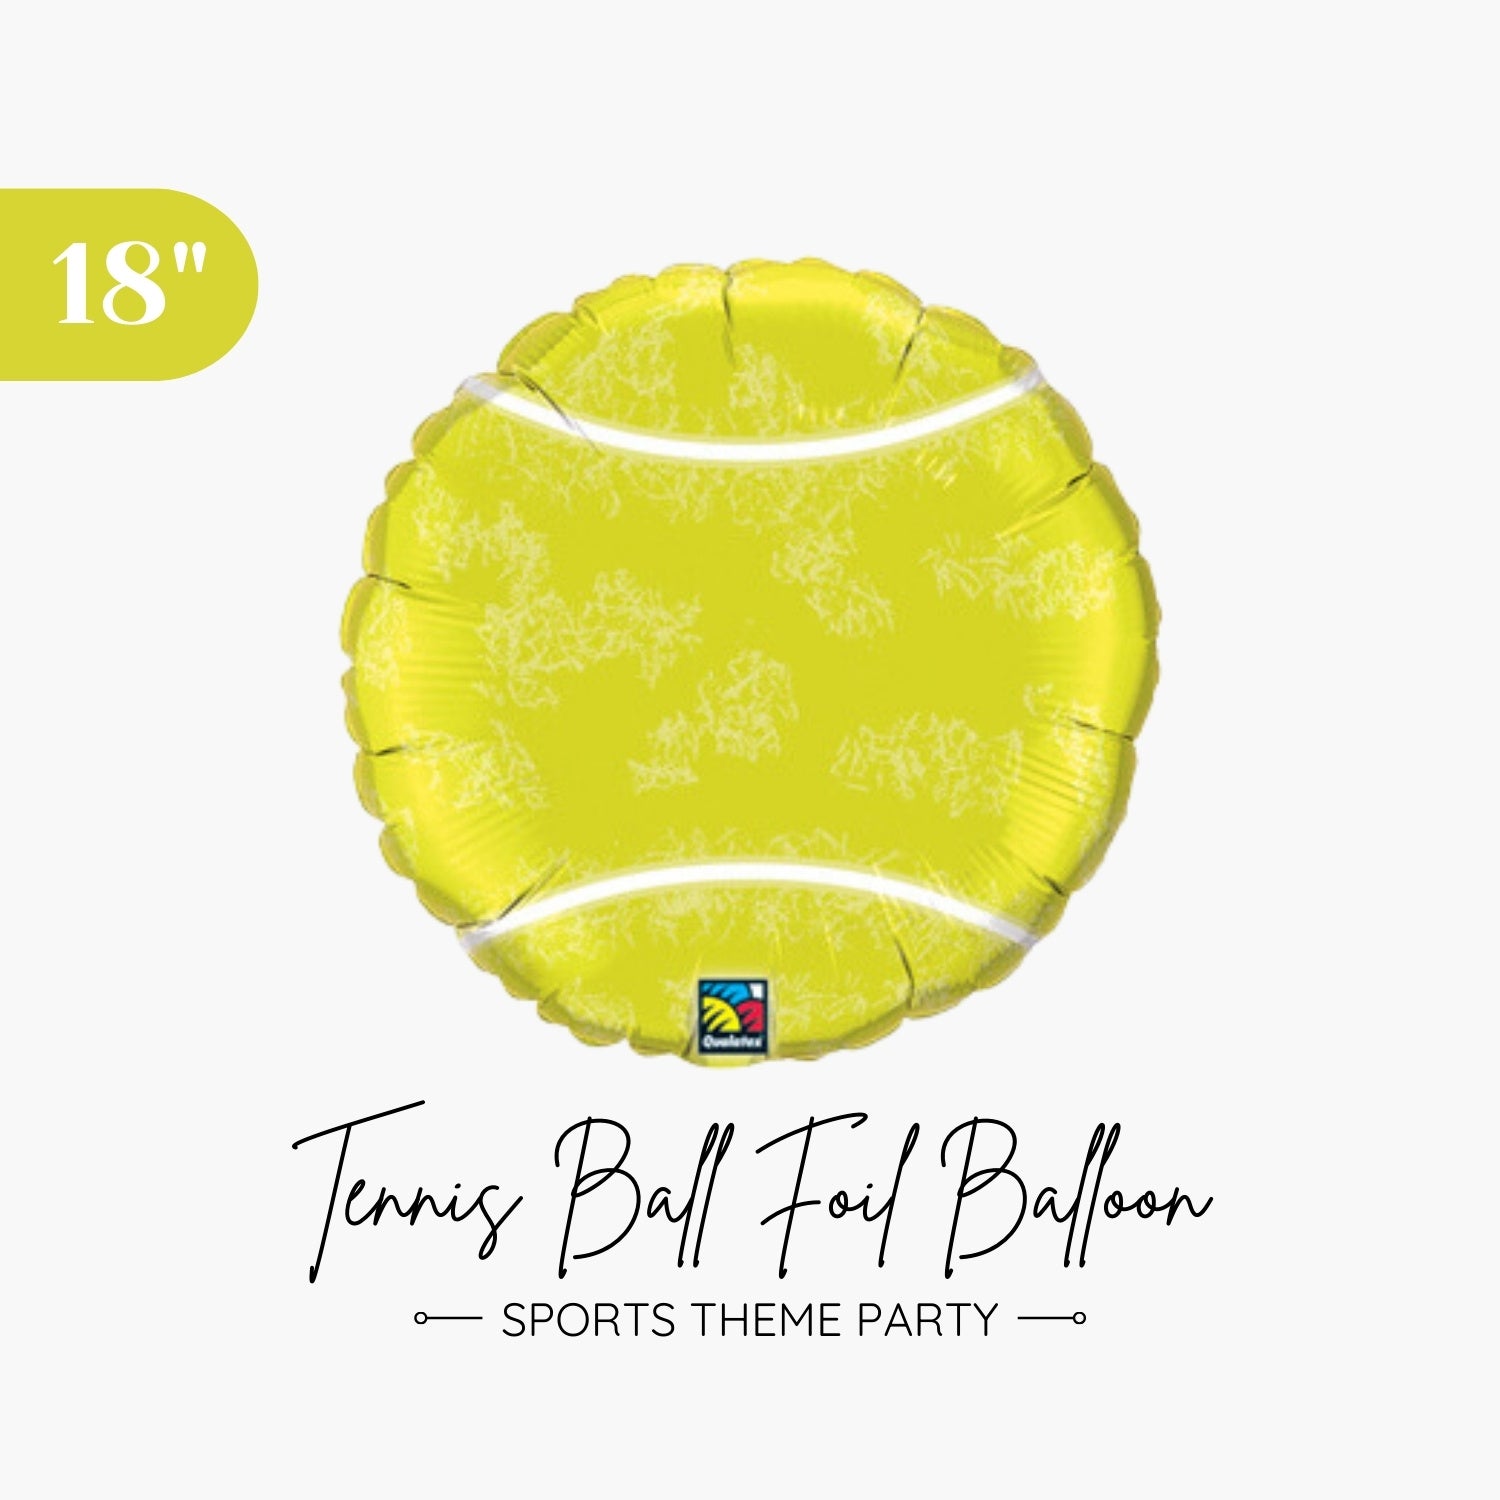 Tennis Ball Foil Balloon 18" - Sports Theme Birthday Party Decorations